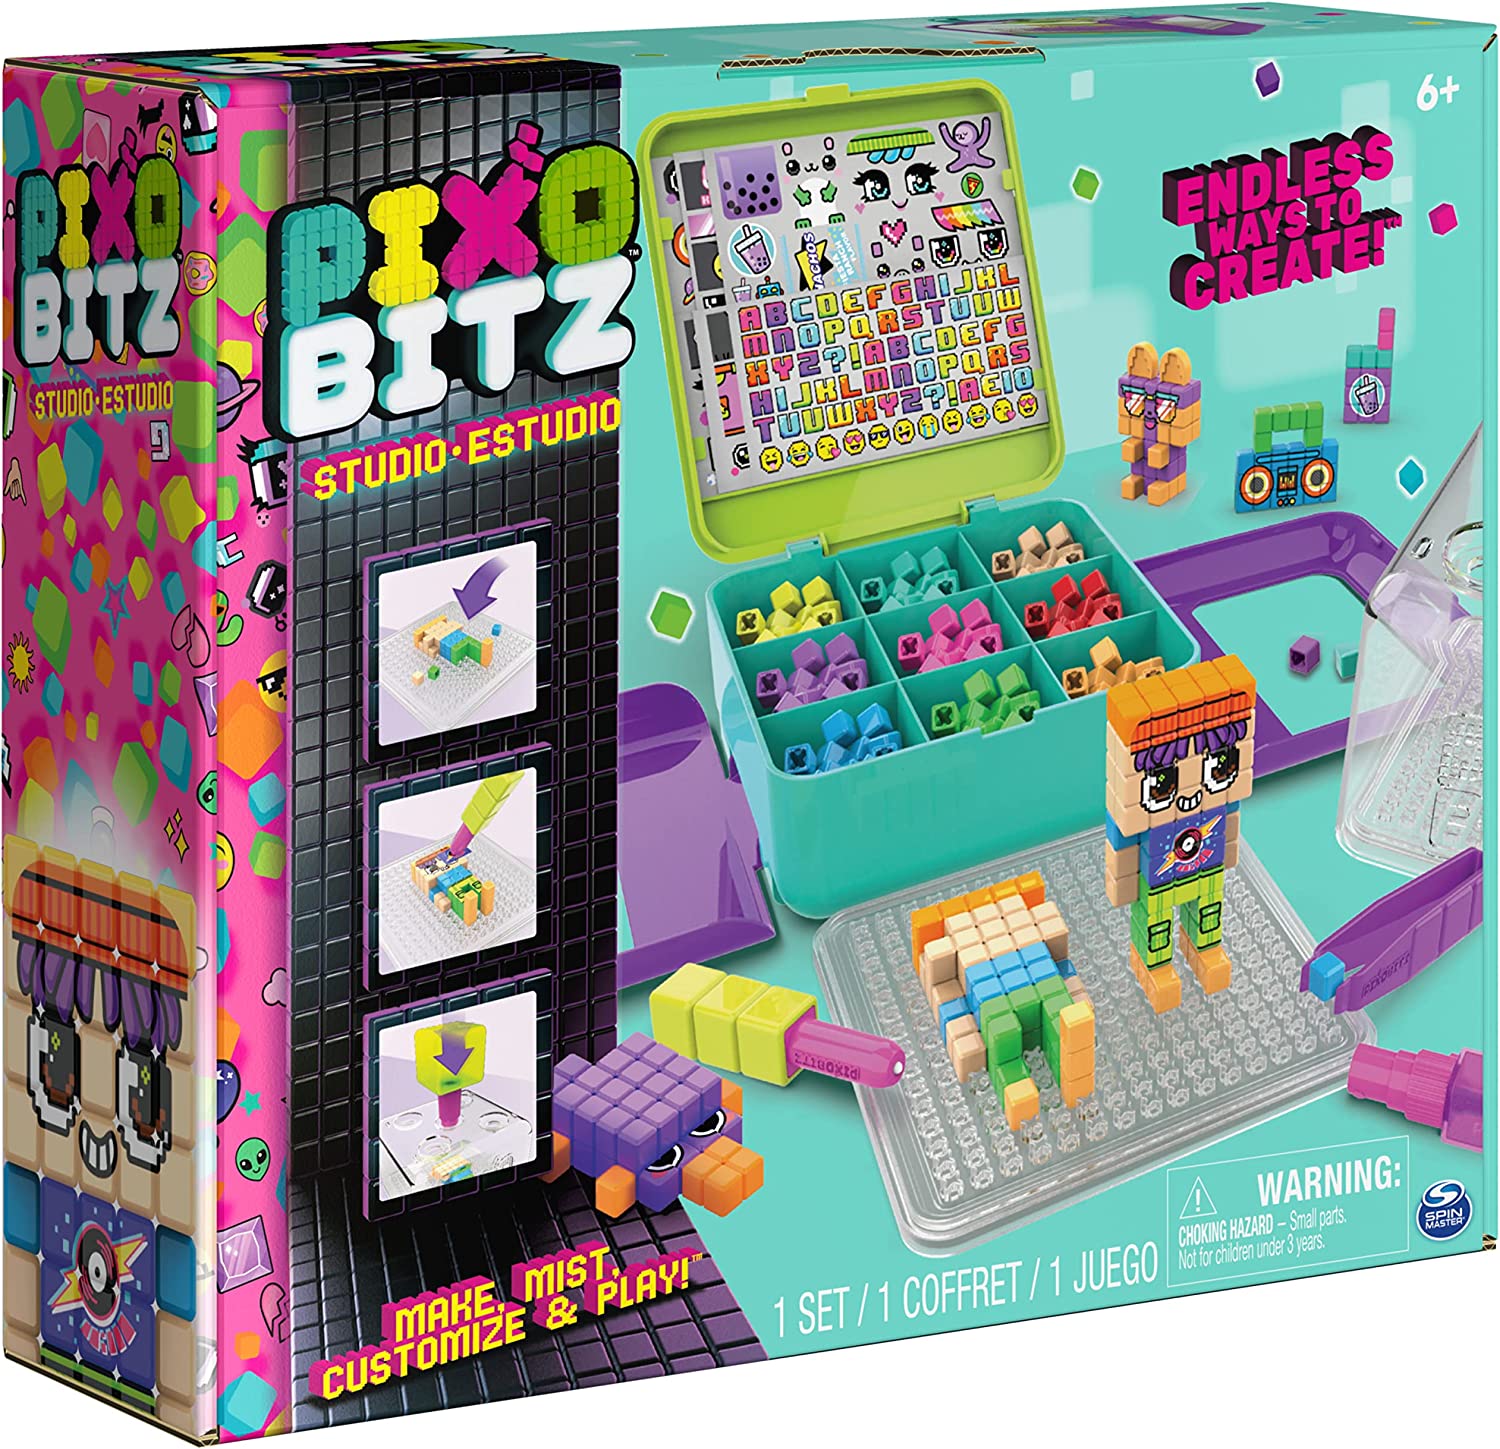 Pixobitz Studio - Gioco creativo per bambini e bambine, 500 bitz